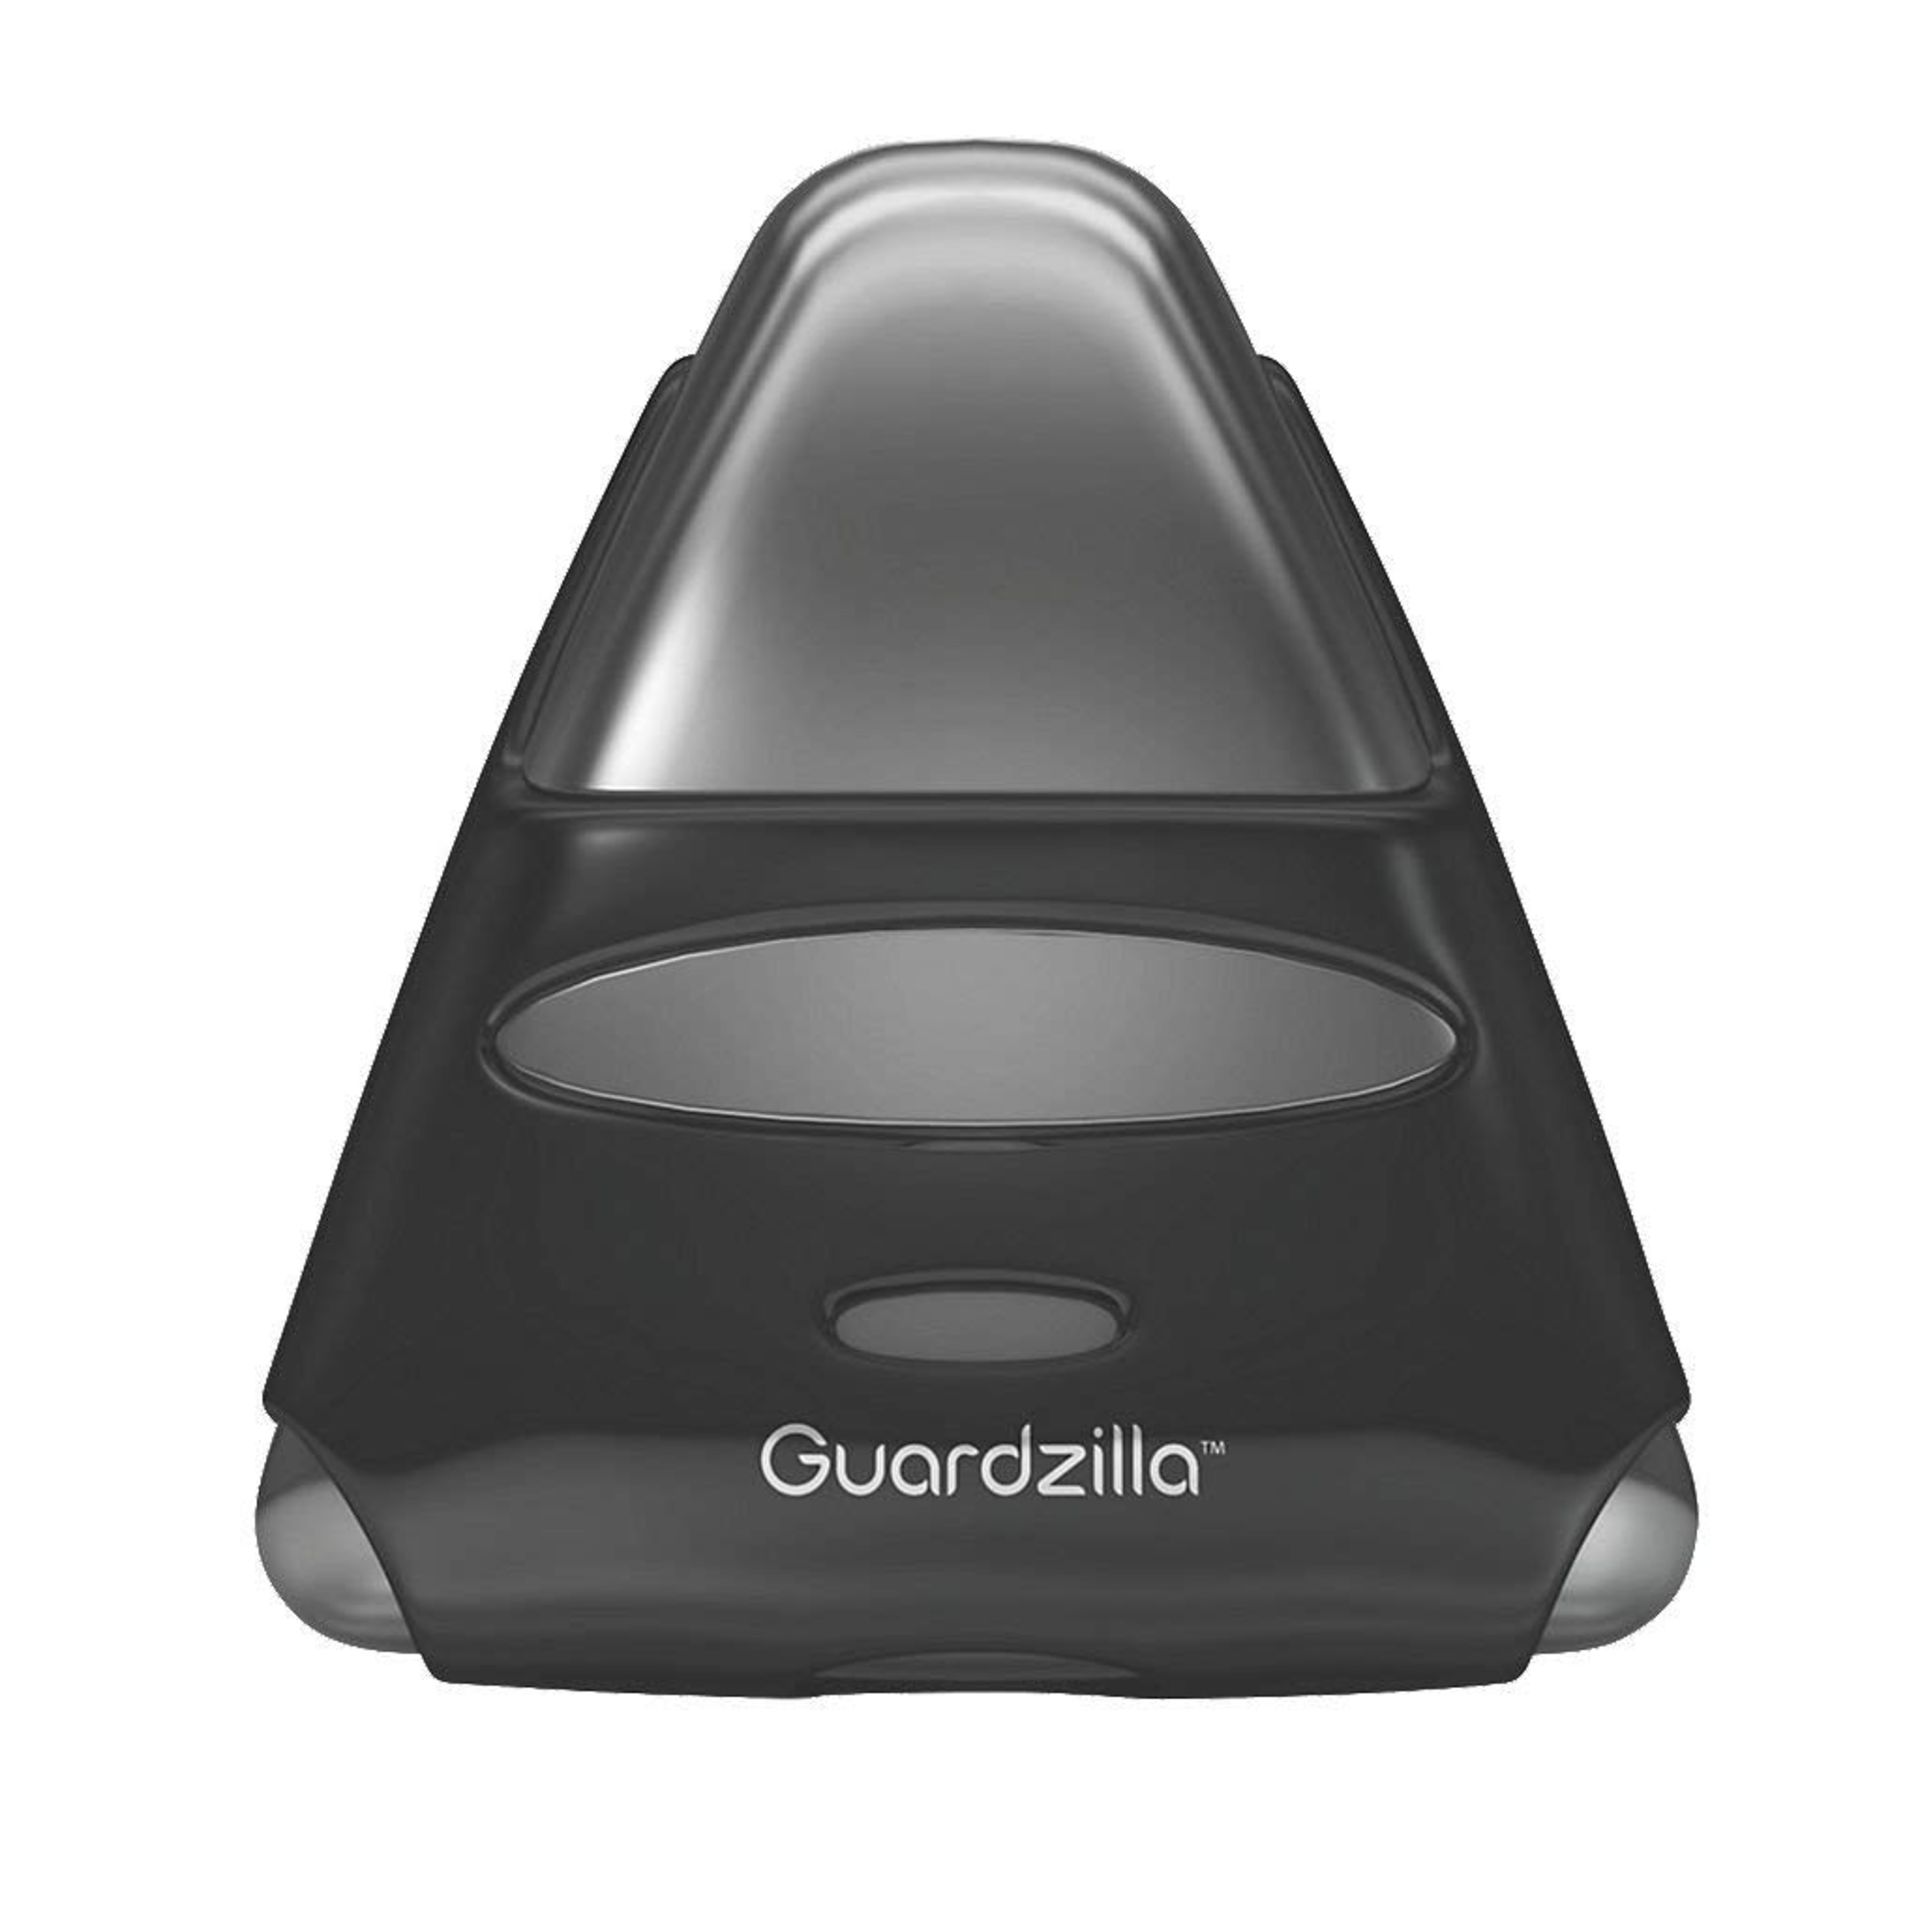 V Brand New Guardzilla All-In-One Security System Including Camera + Siren + Smartphone Remote